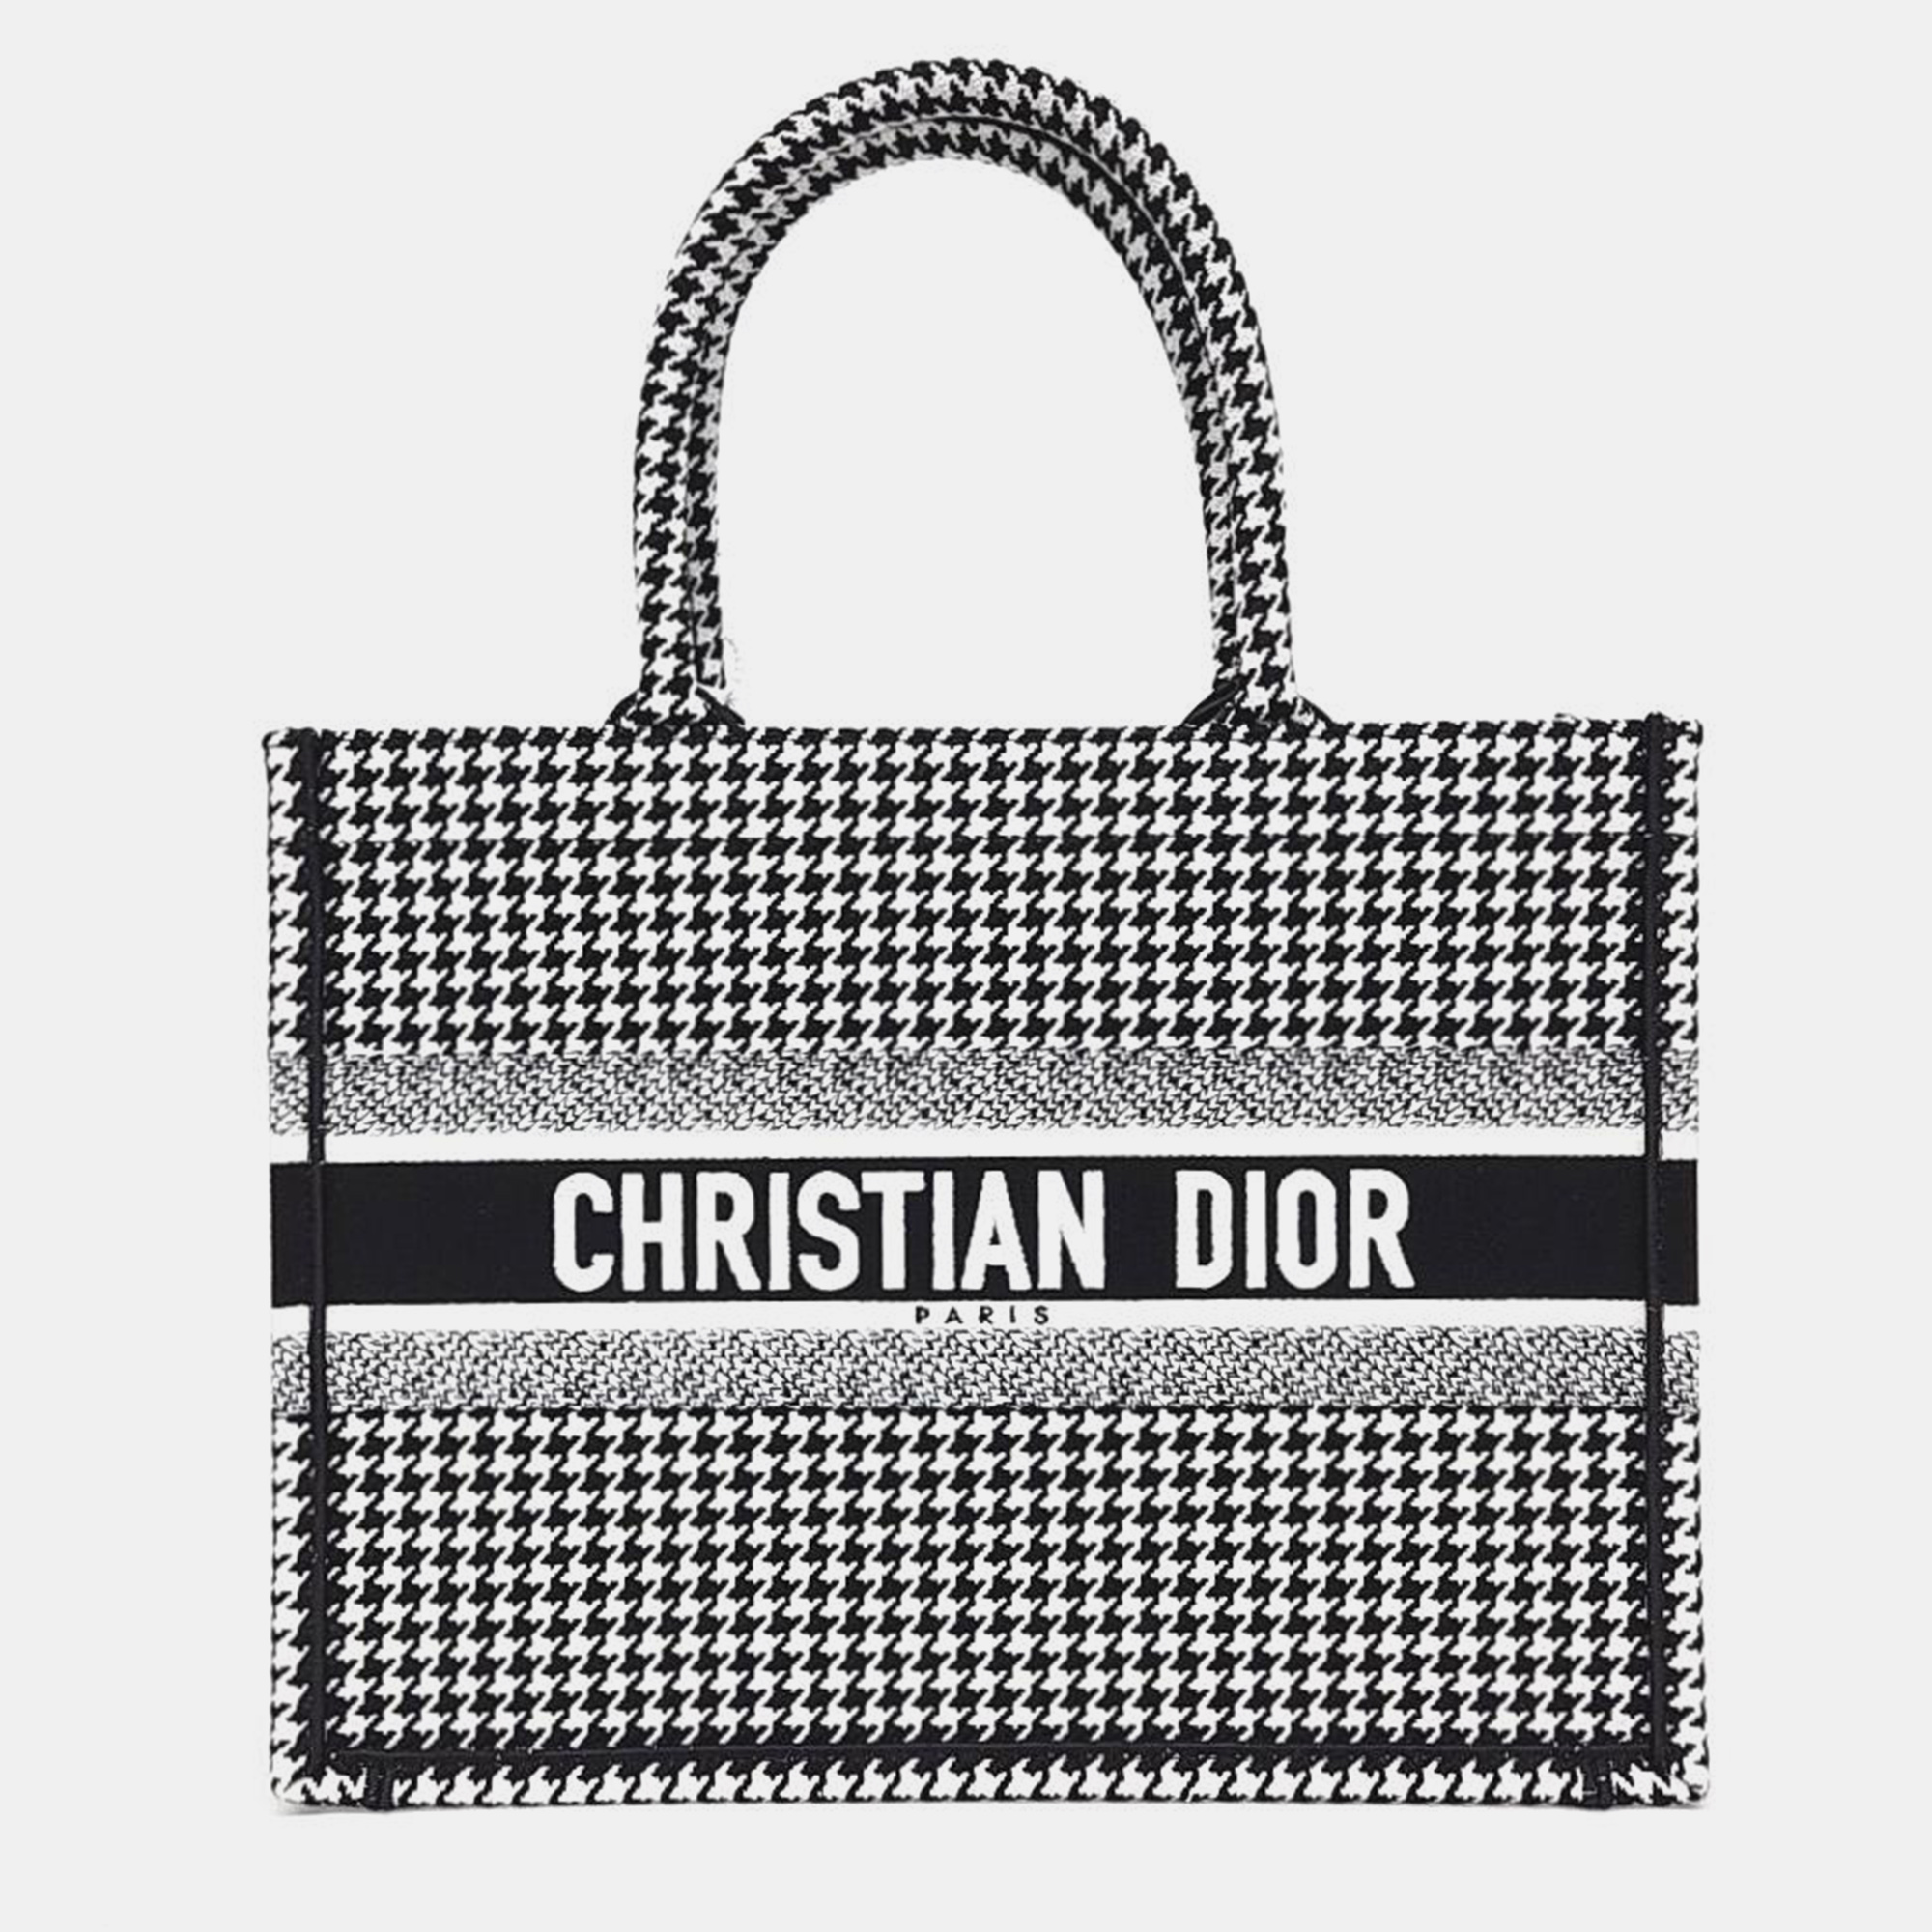 Christian dior book tote handbag 36